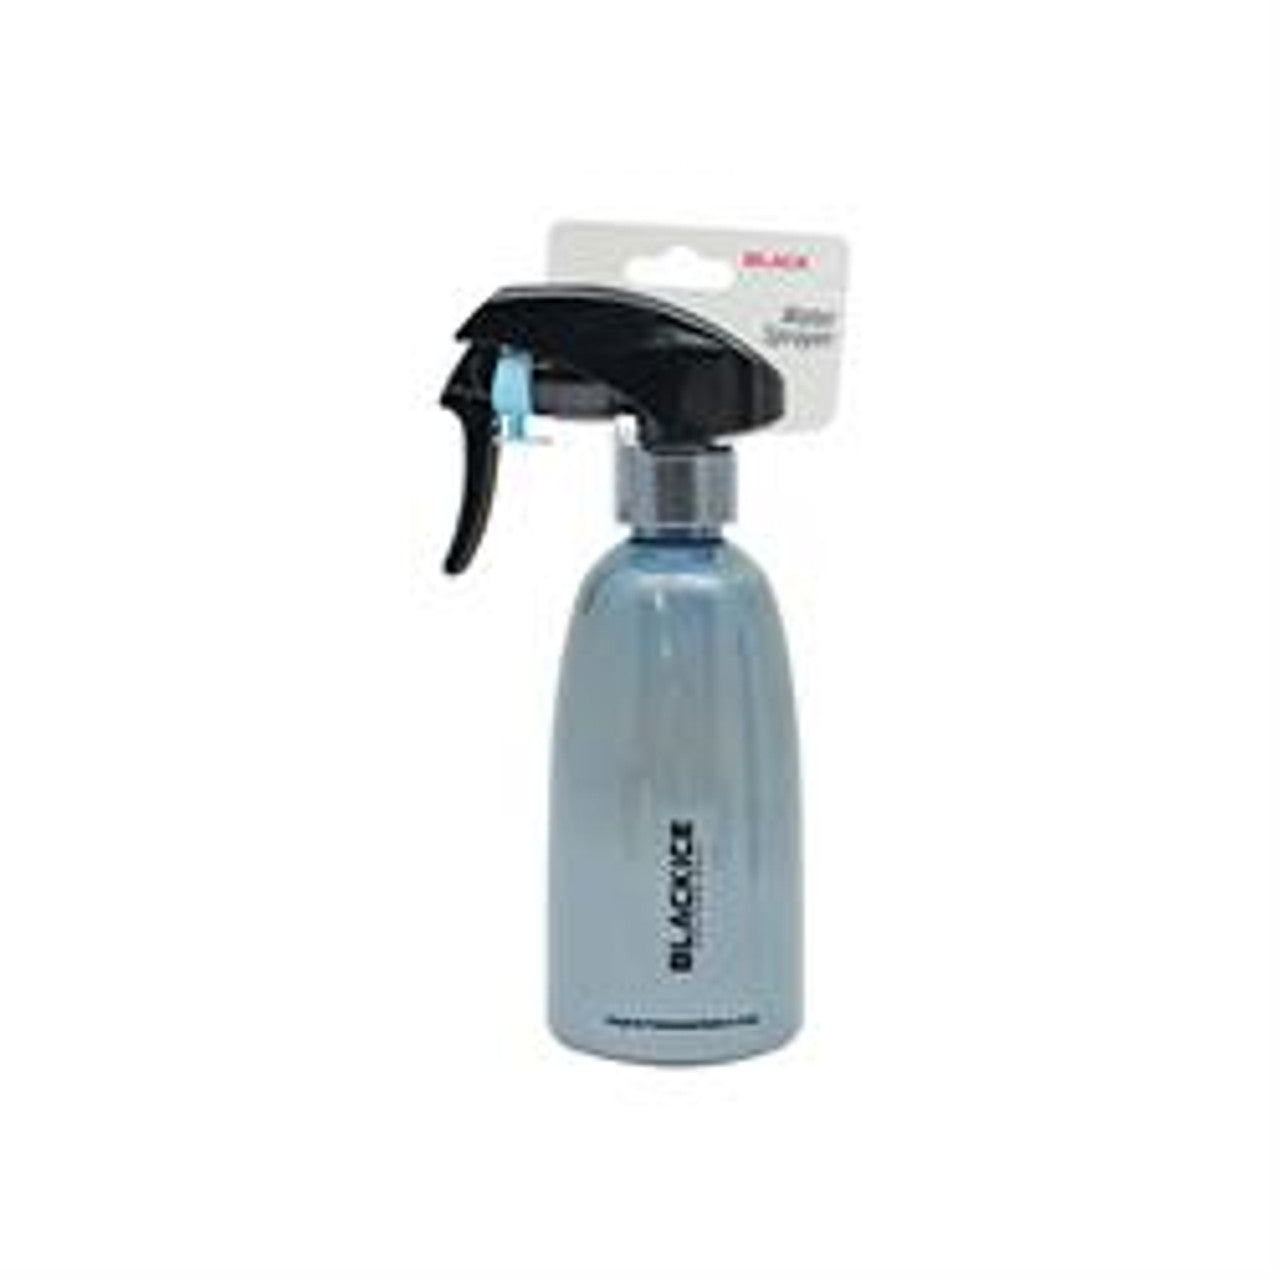 Black Ice Professional Water Sprayer - Small - Grey/Black